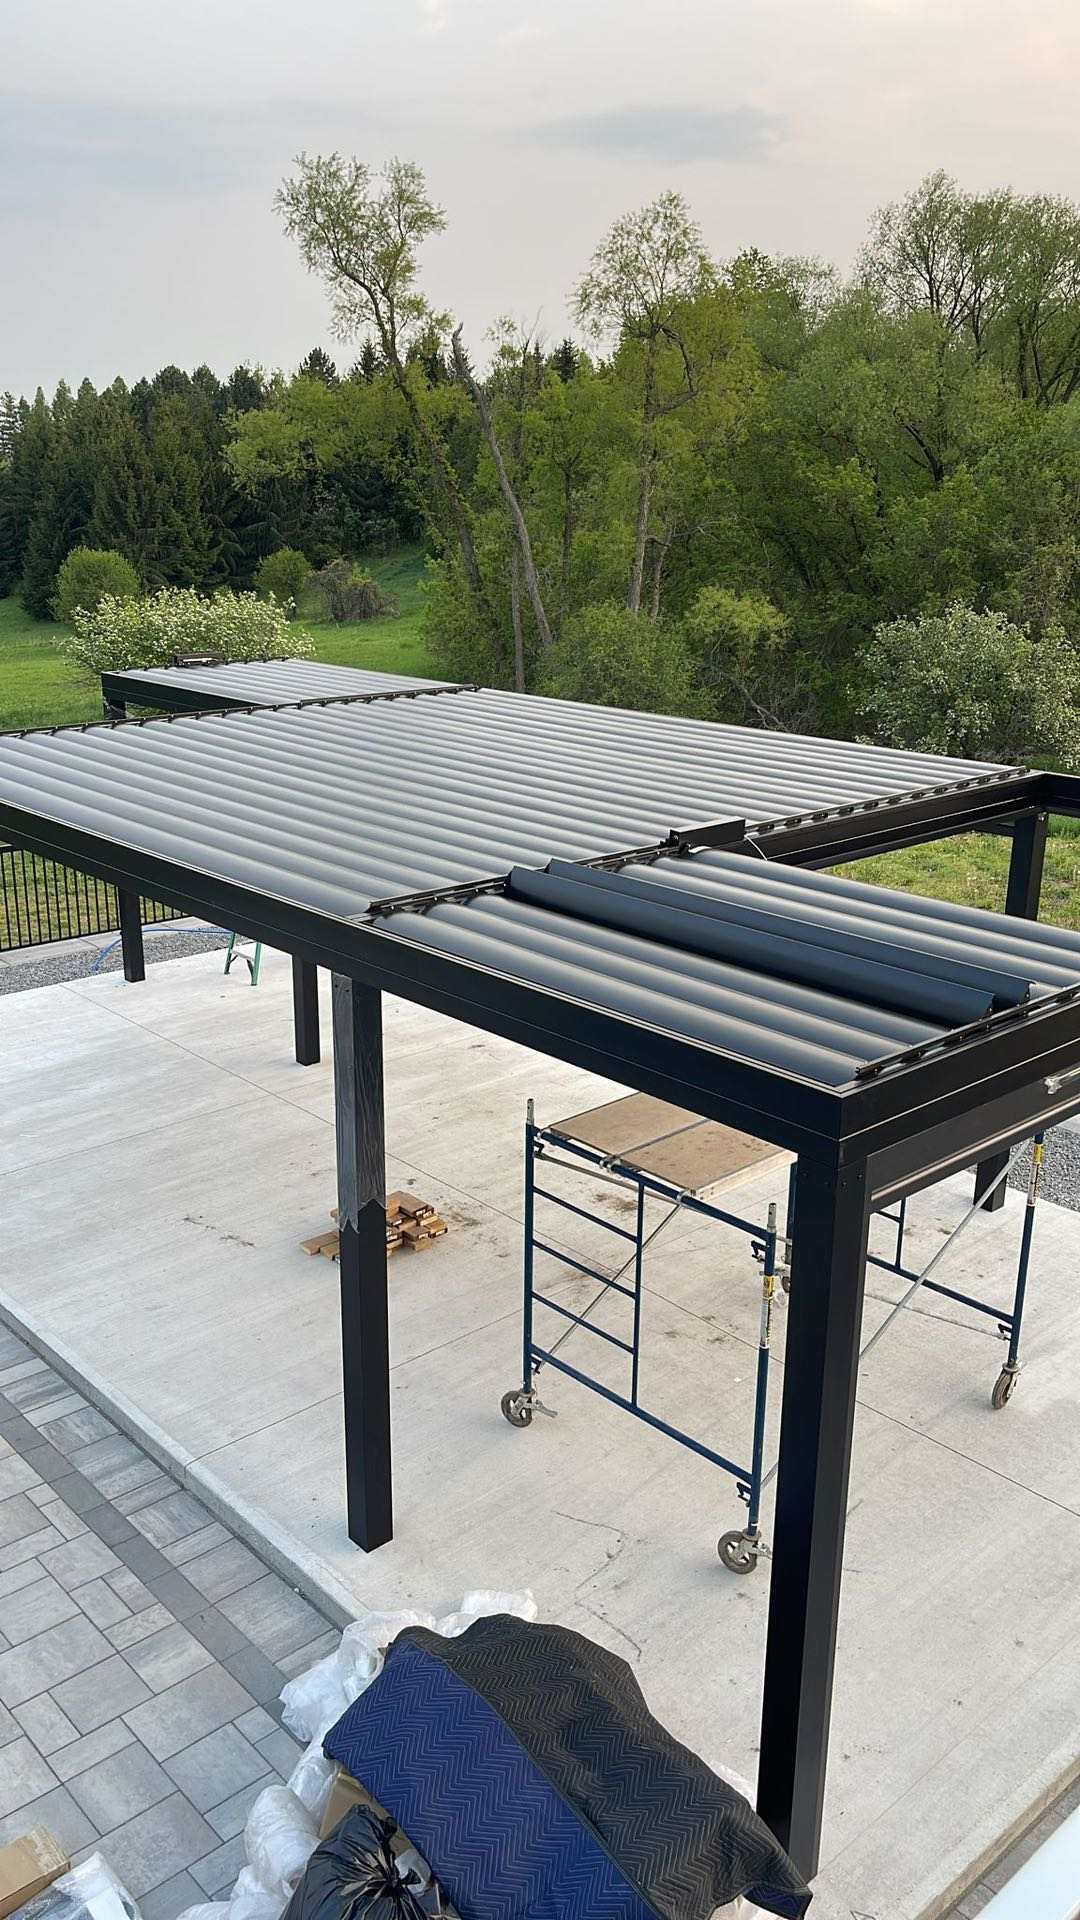 Sunzout Aluminum Pergola Roof Kit with Motorized Louvered Roof